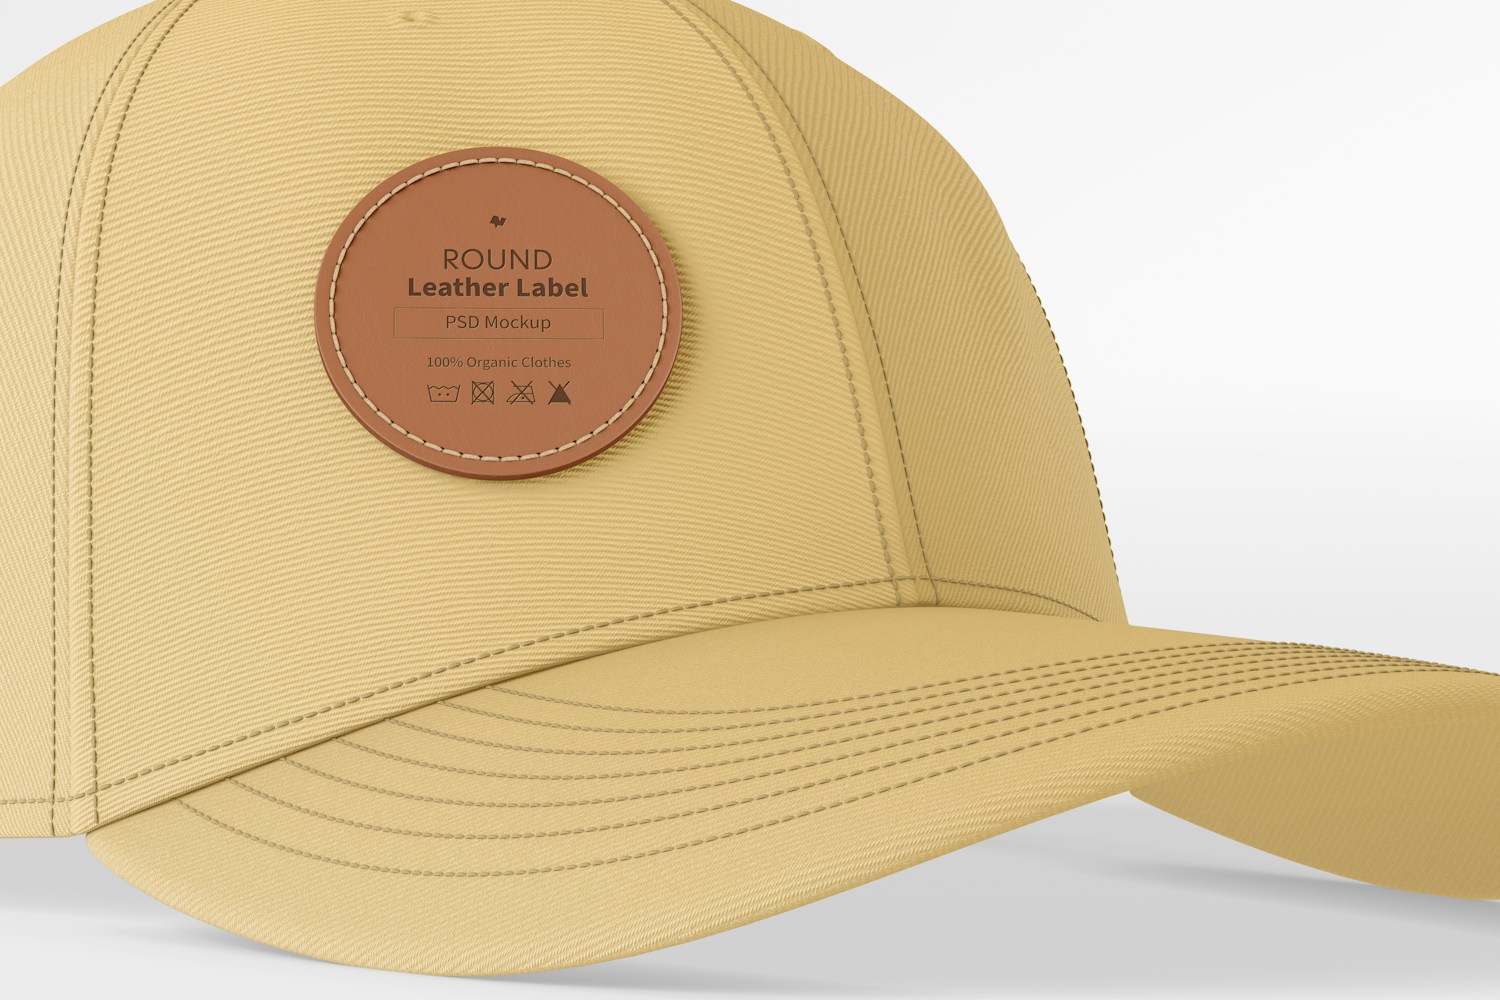 Round Leather Label on Cap Mockup